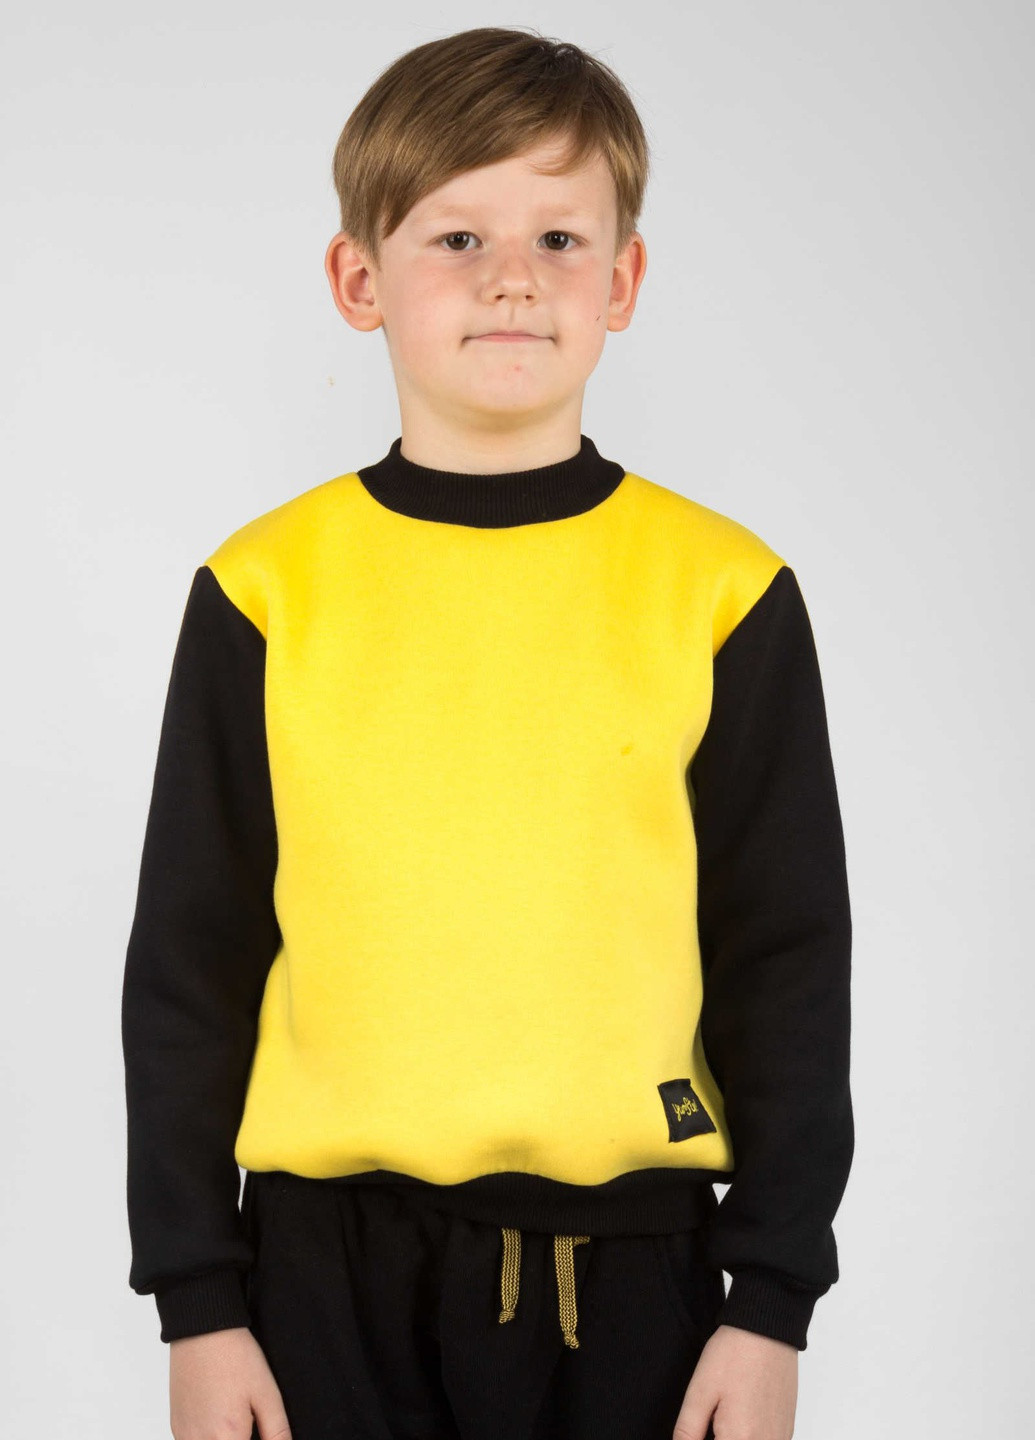 Yumster світшот жовто-чорний для хлопчика однотонний жовтий кежуал трикотаж